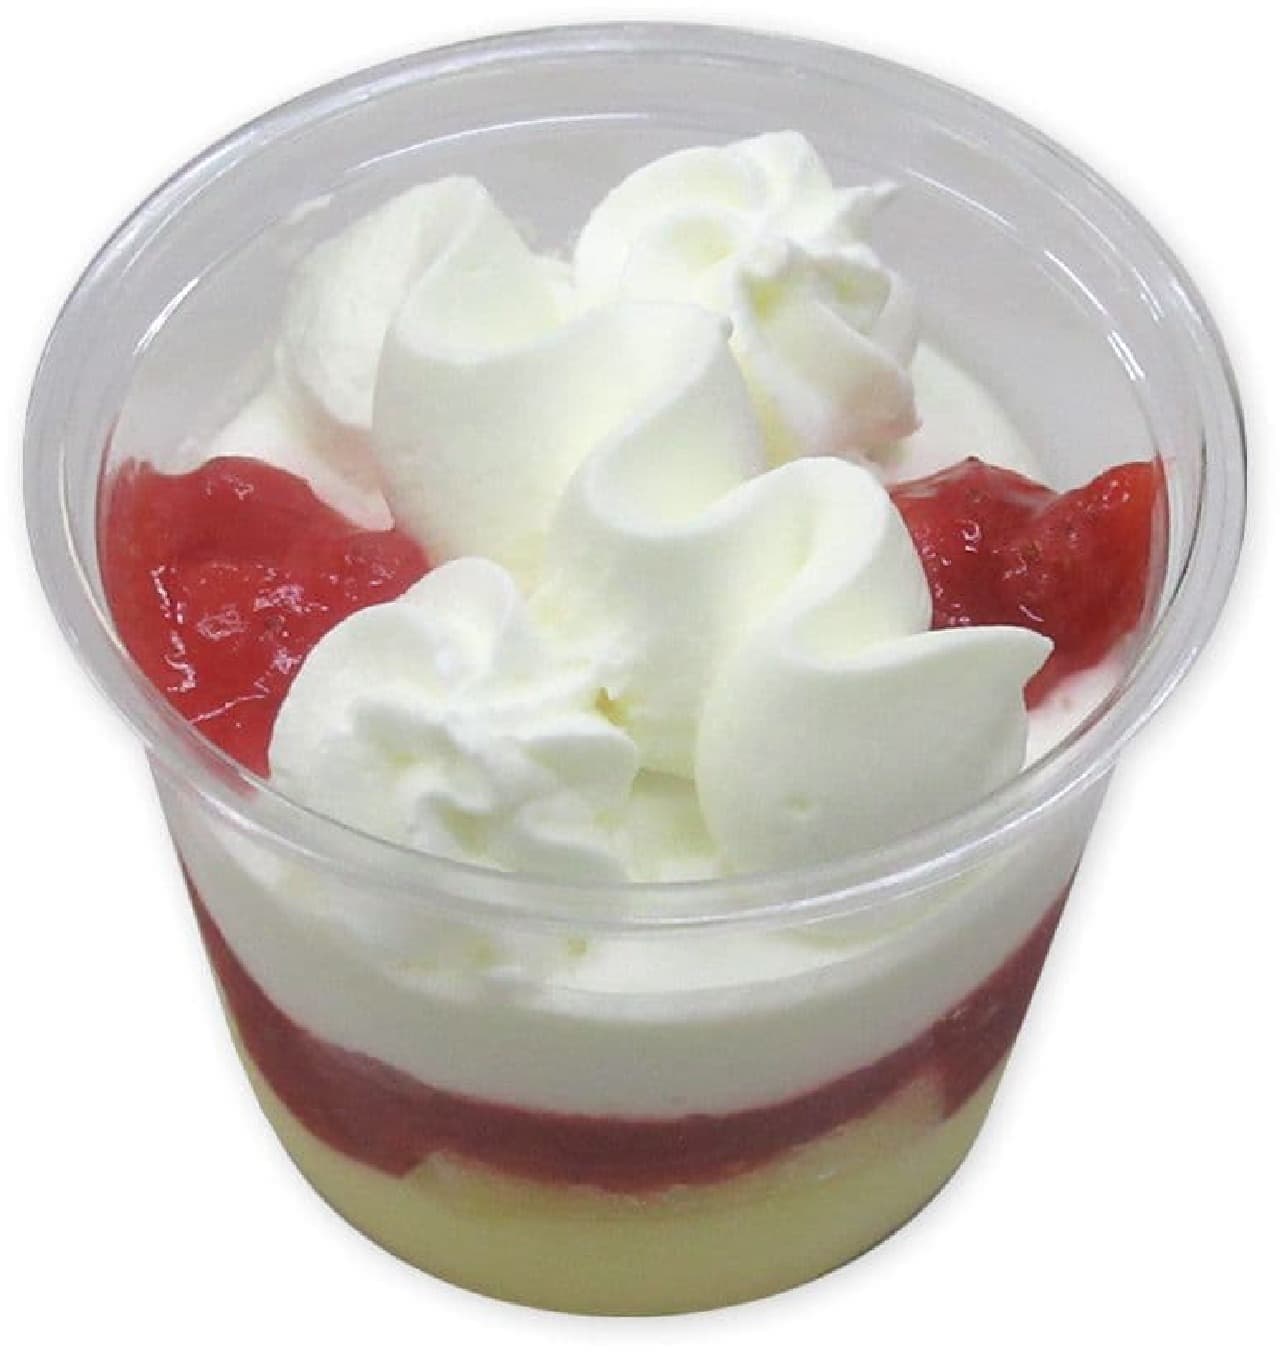 7-ELEVEN "Strawberry Dolce Custard with Bavarian Cream"